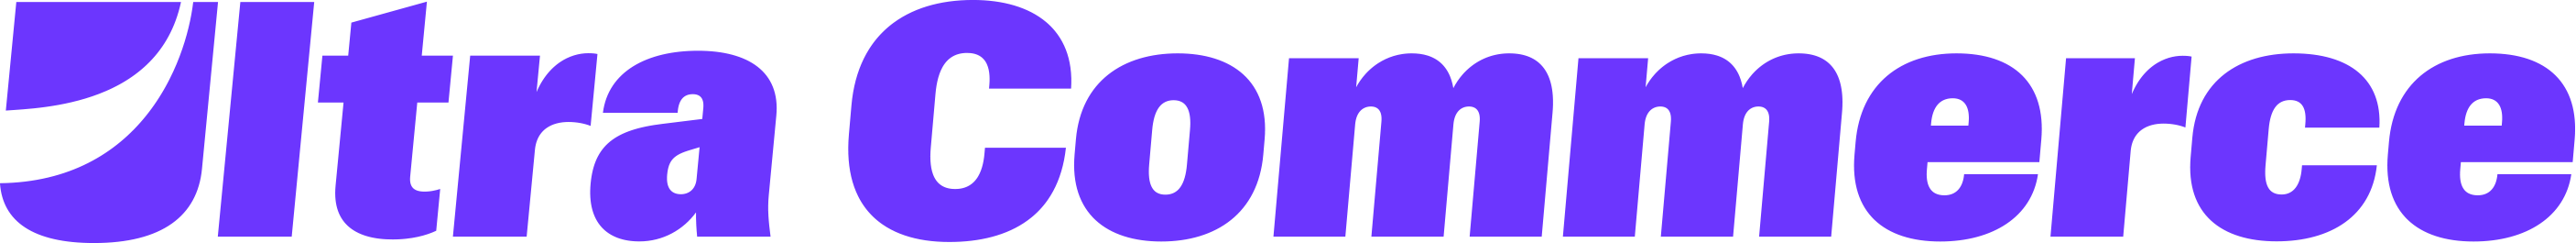 Ultra Logo Primary RGB Purple - Danielle Shabo